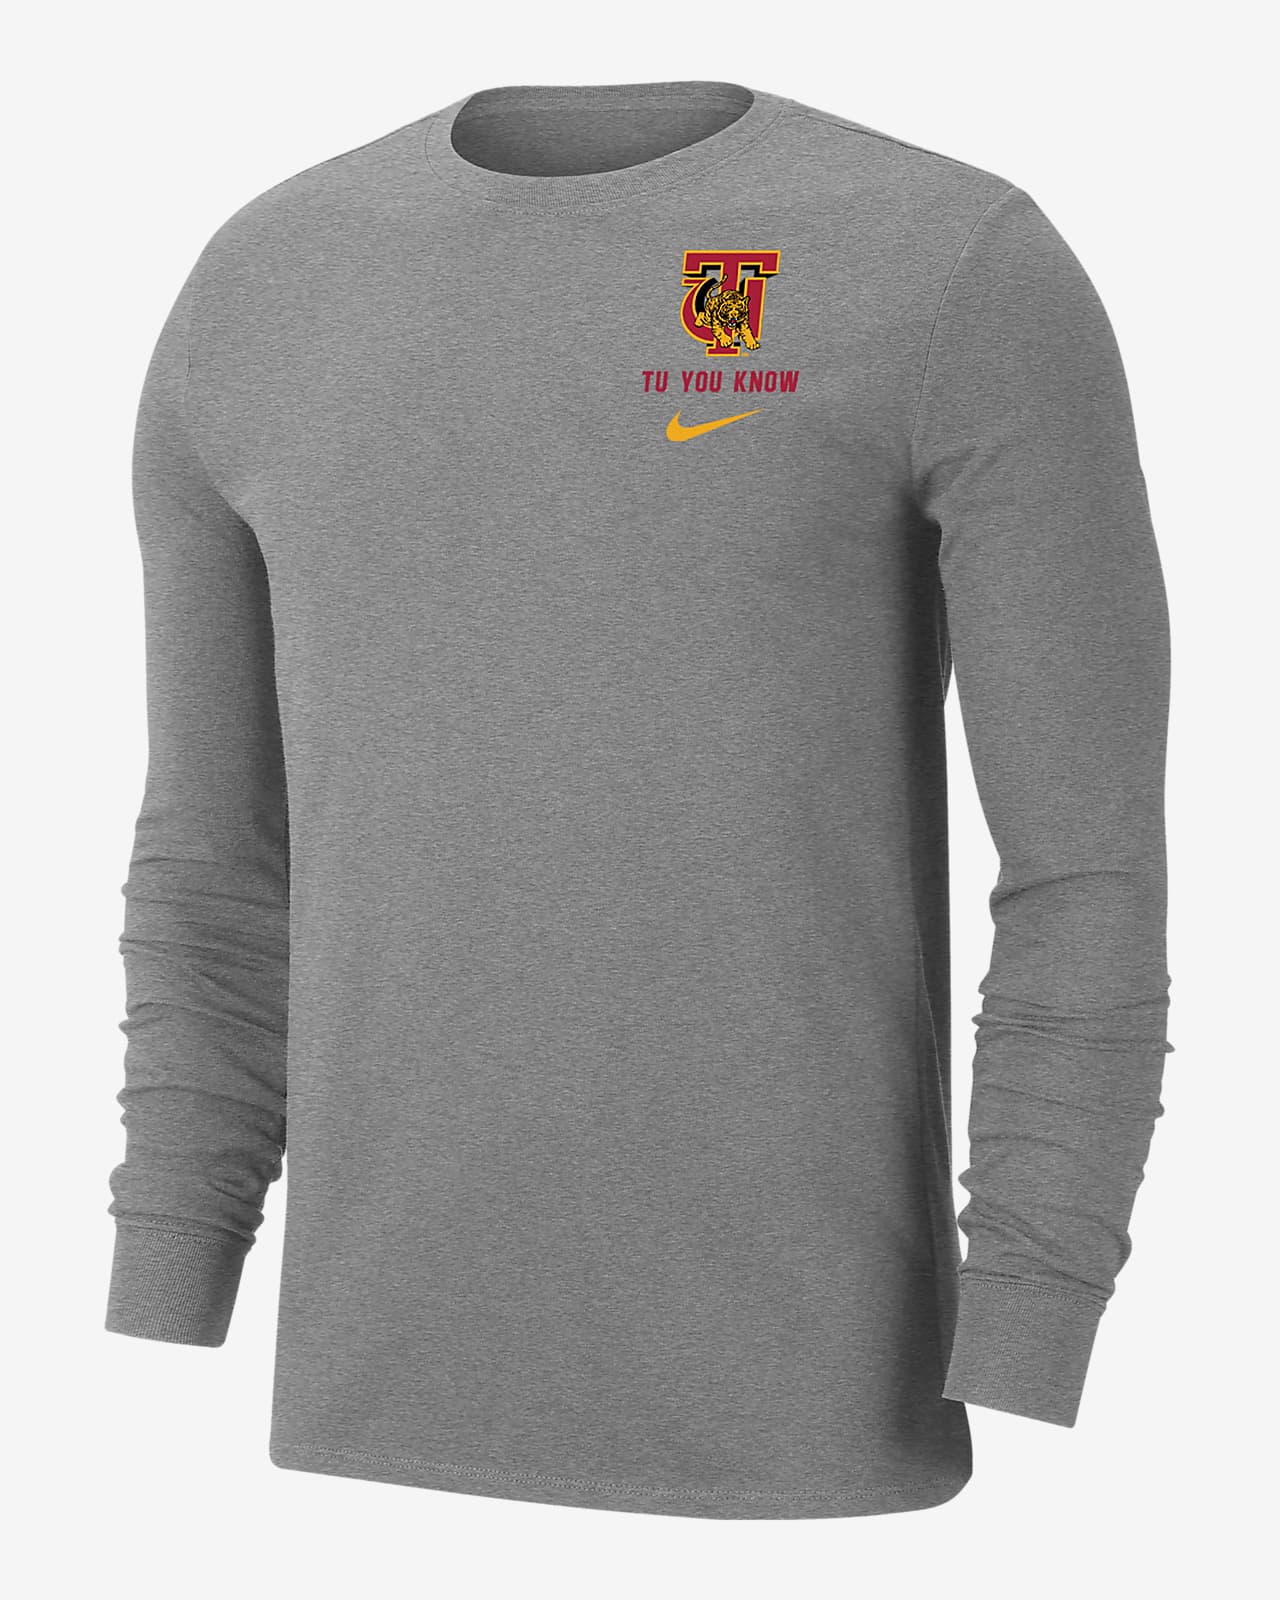 Nike College Dri-FIT (Tuskegee) Men's Long-Sleeve T-Shirt